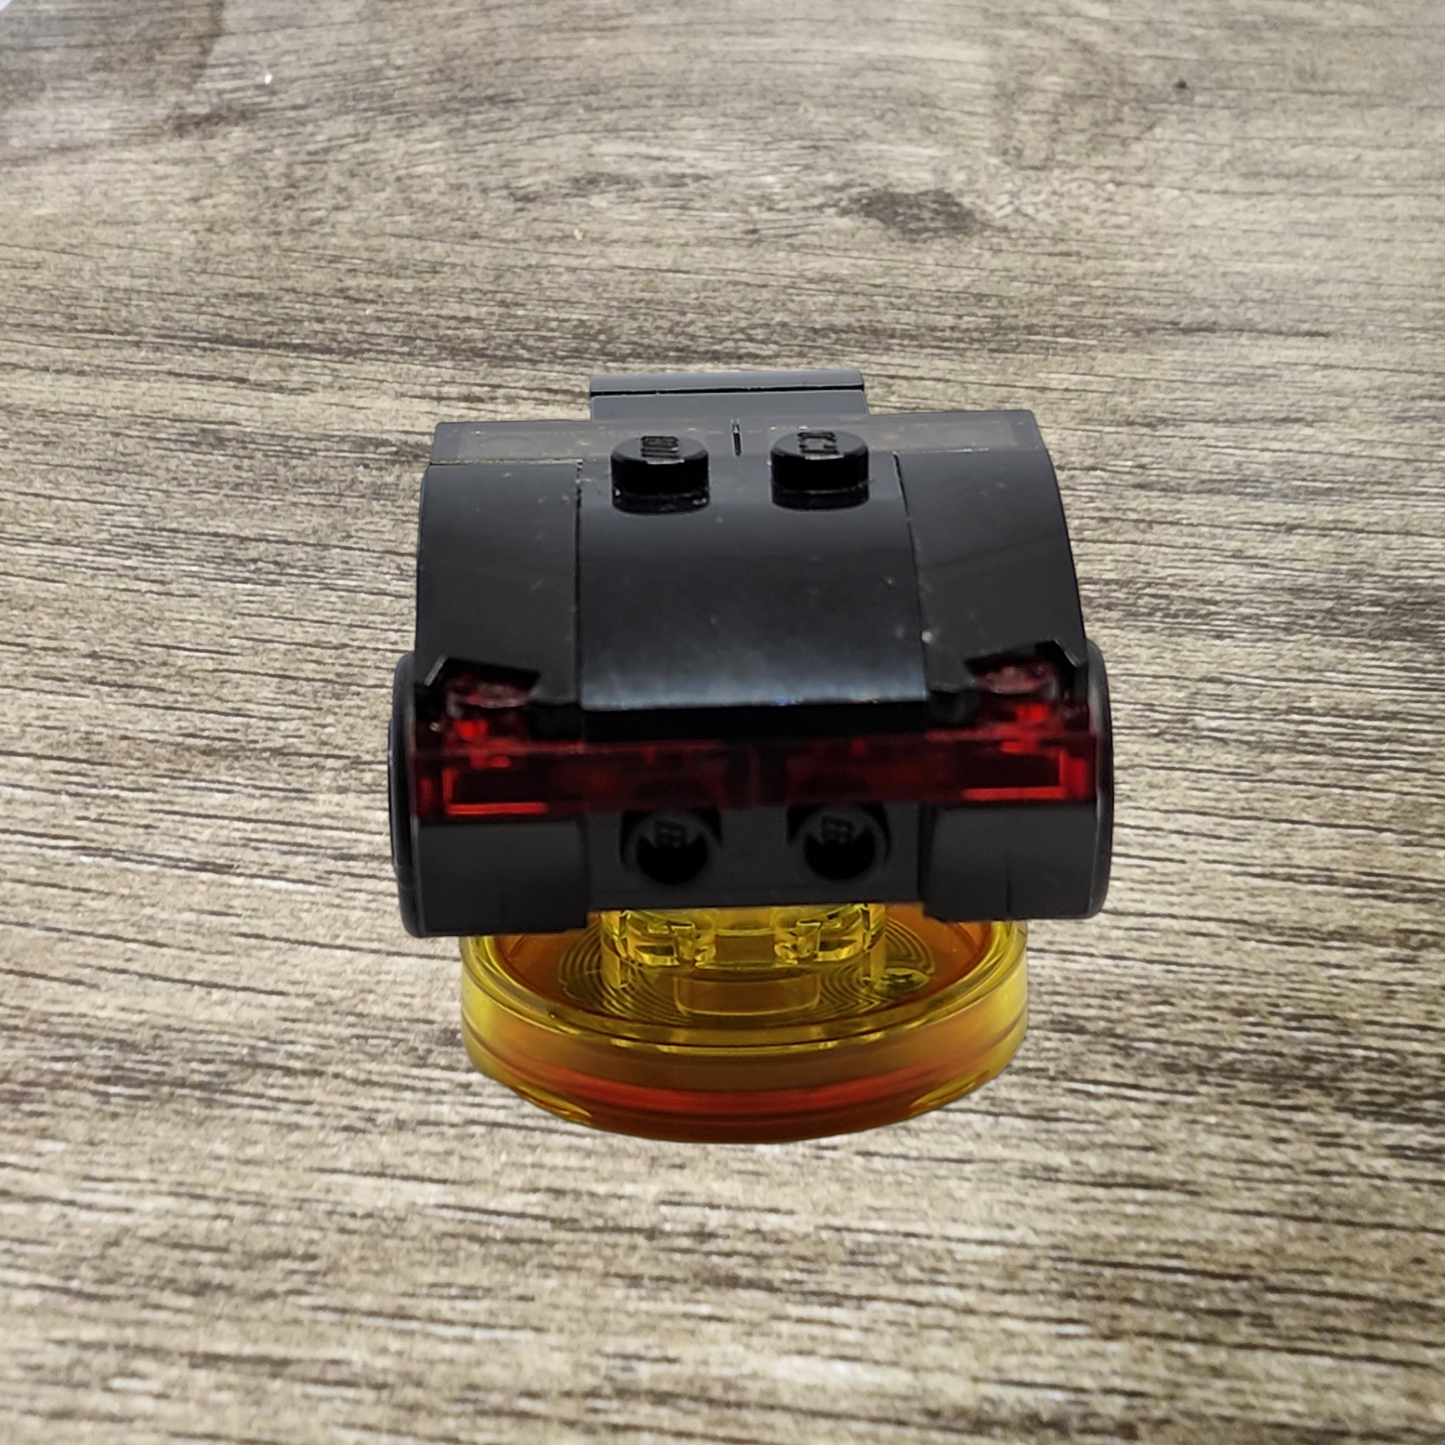 K.I.T.T. Car From Knight Rider Lego Dimensions 71286 Black Lego